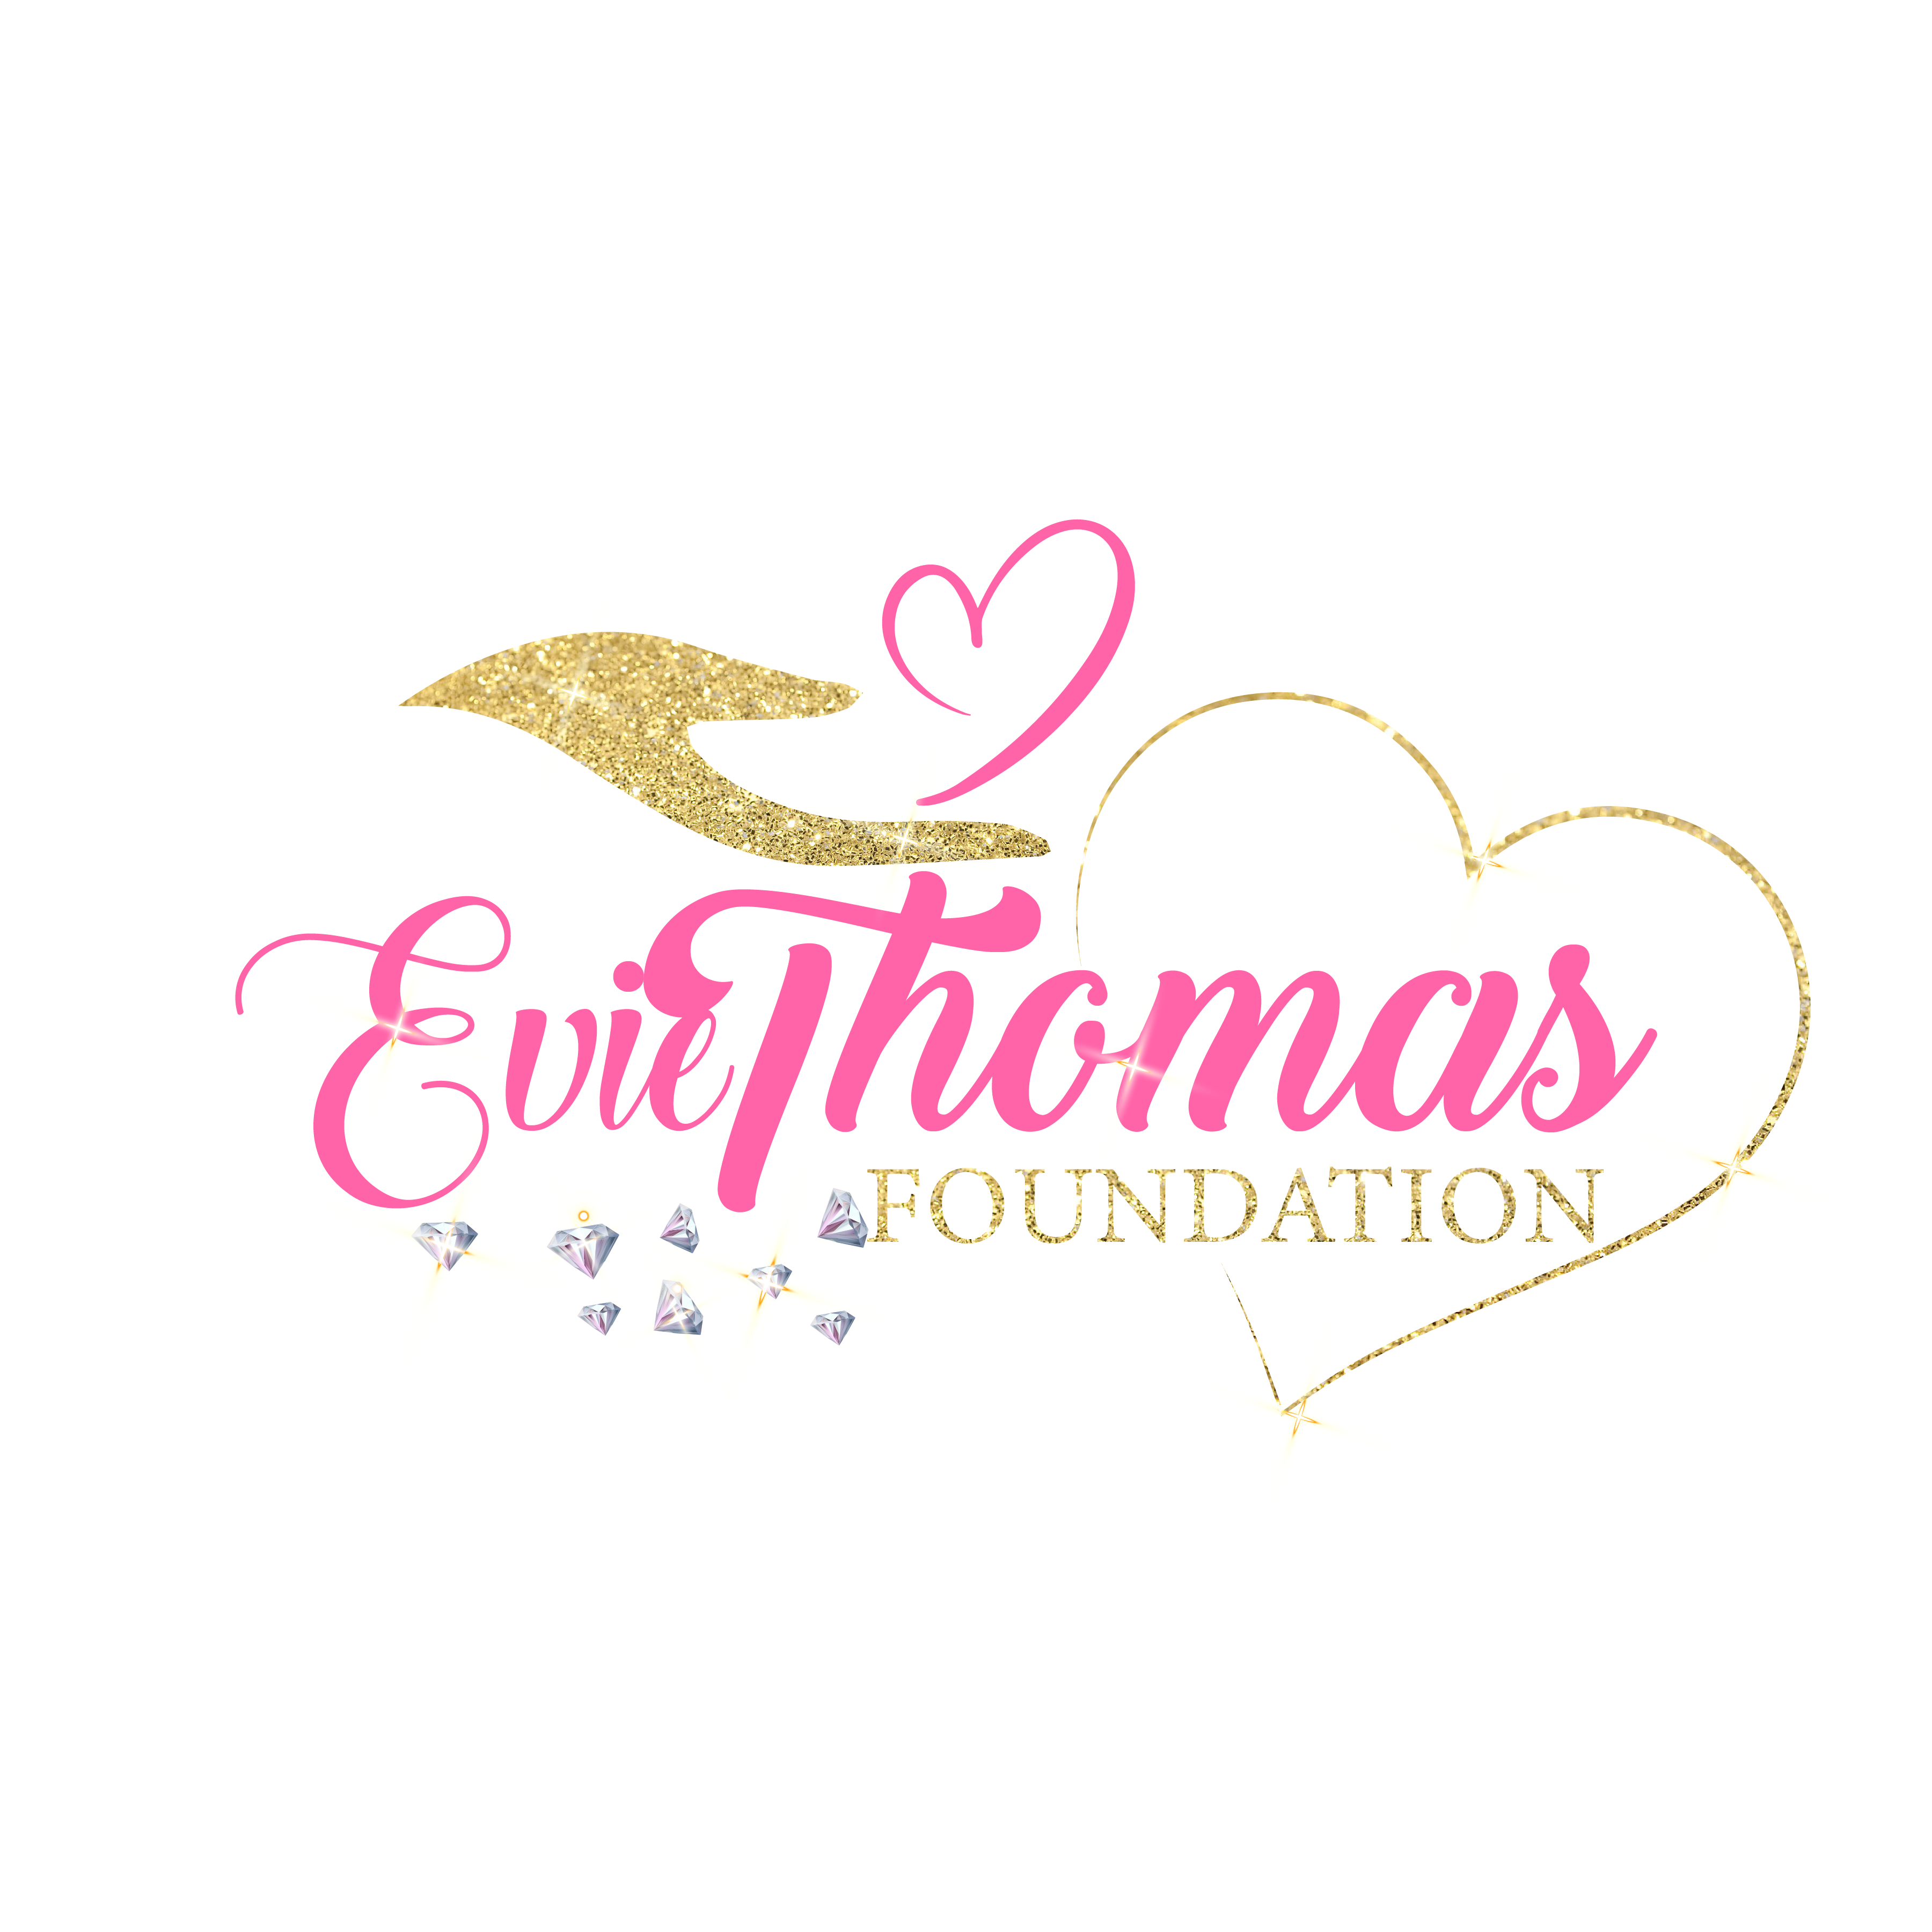 EVIE THOMAS FOUNDATION logo